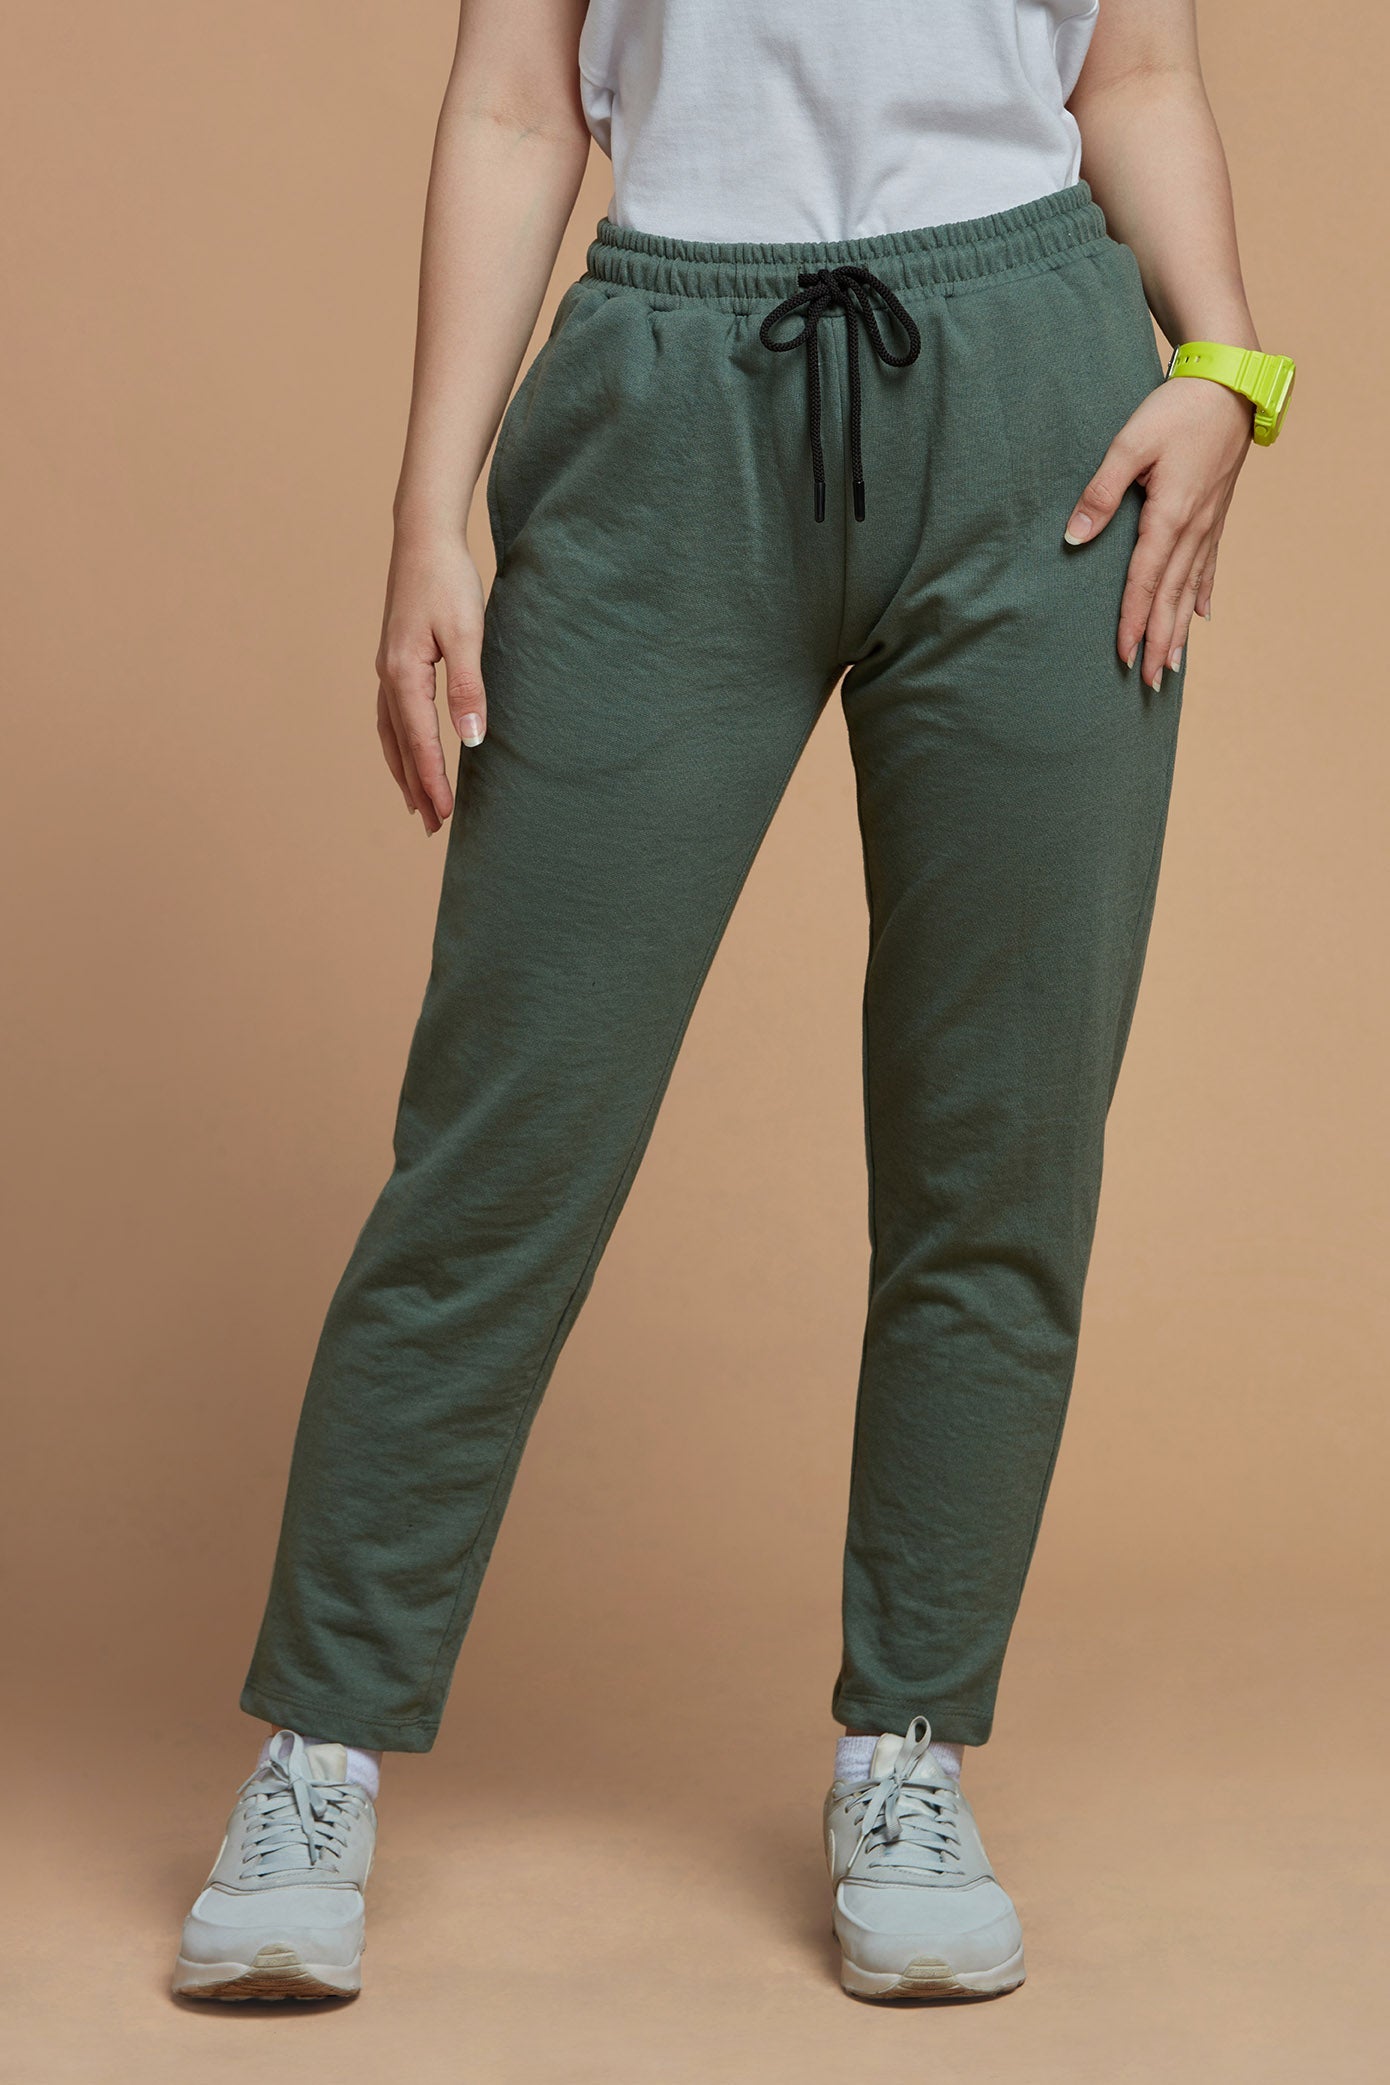 Buy ISU Olive Regular Fit Joggers for Women Online @ Tata CLiQ